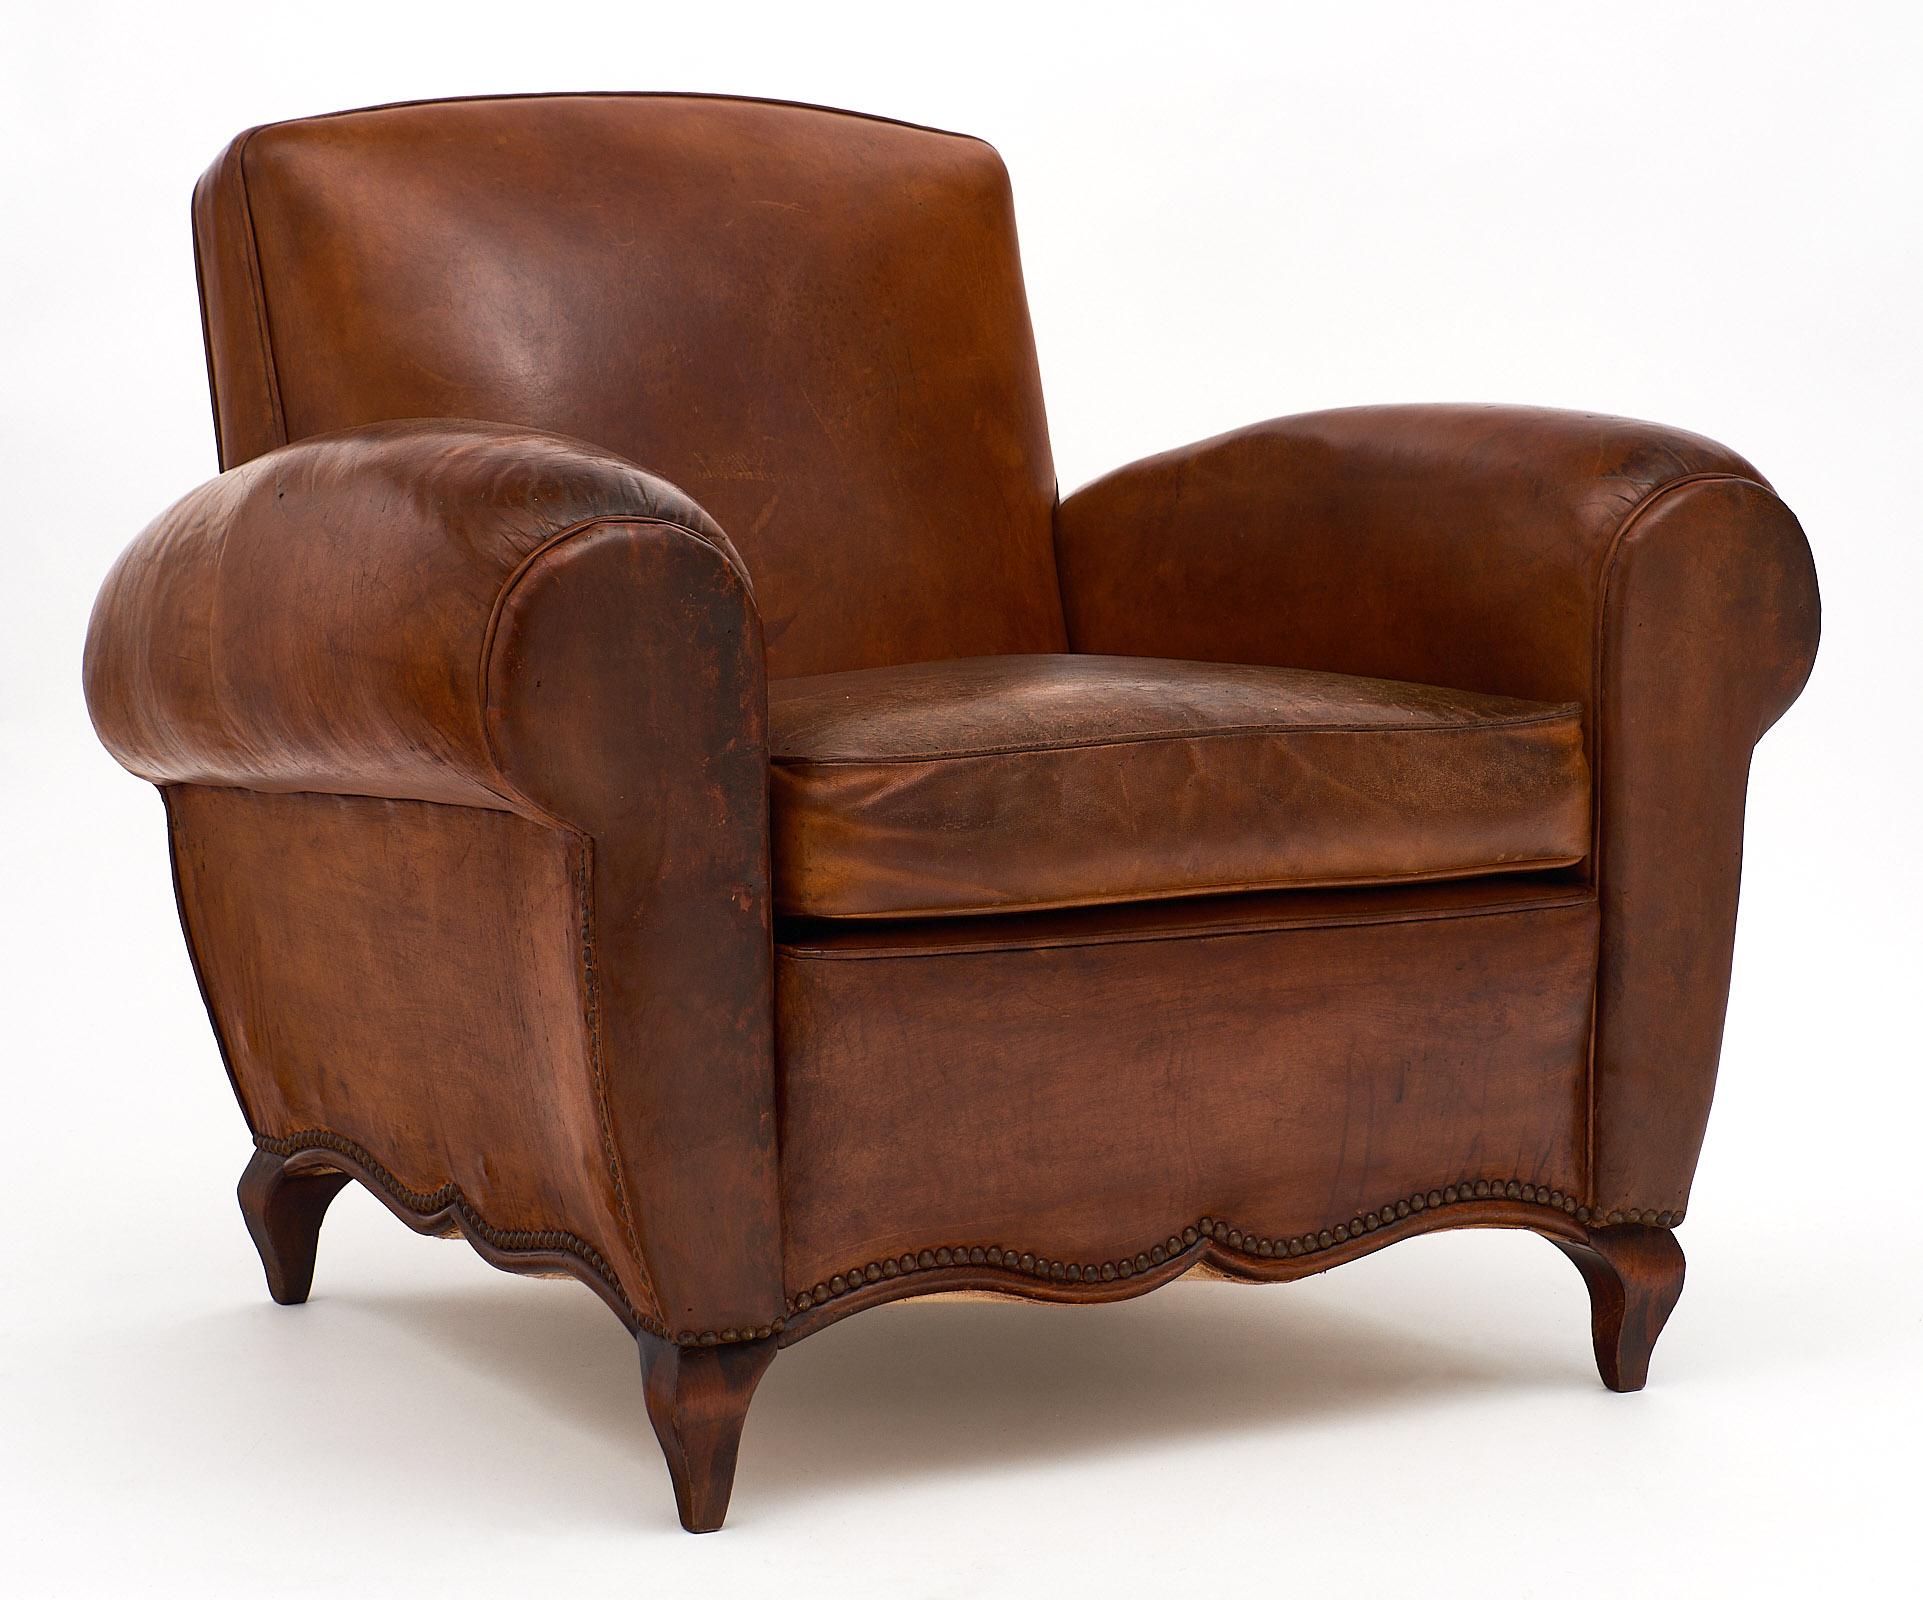 Vintage Art Deco French Club Chair (Art déco)